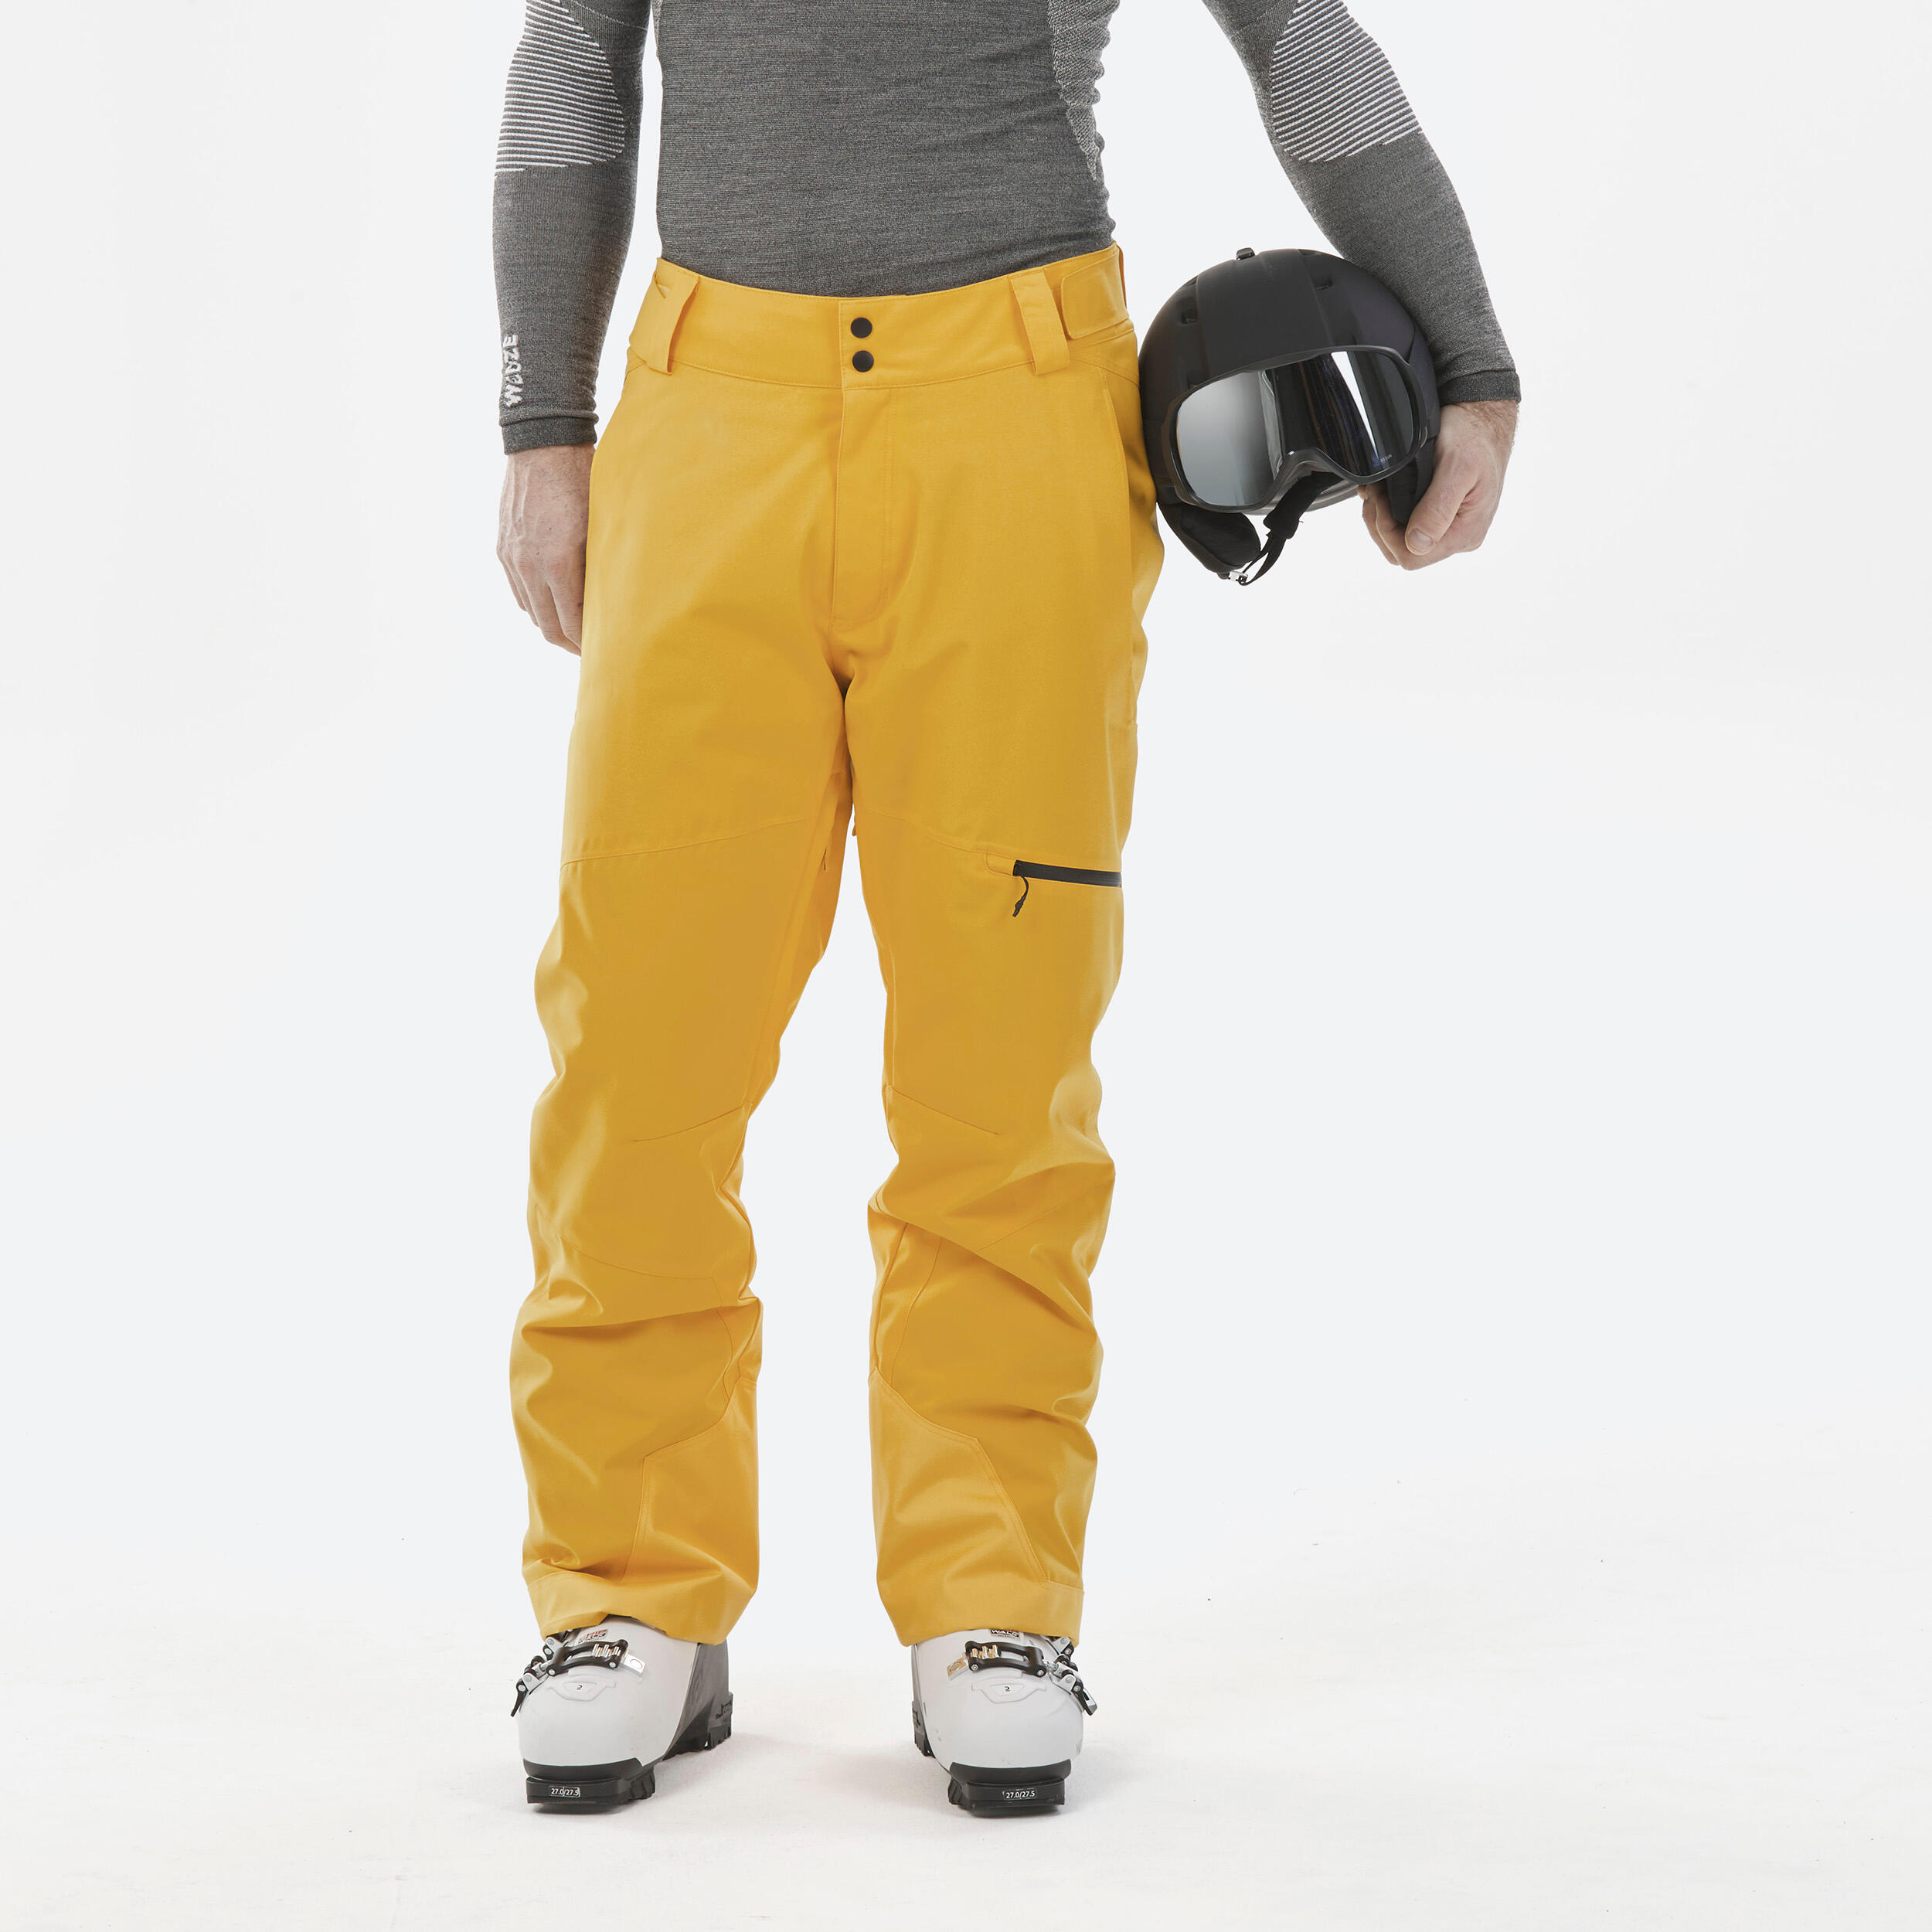 Mens Warm Ski Trousers Regular 500 - Light Yellow 1/8